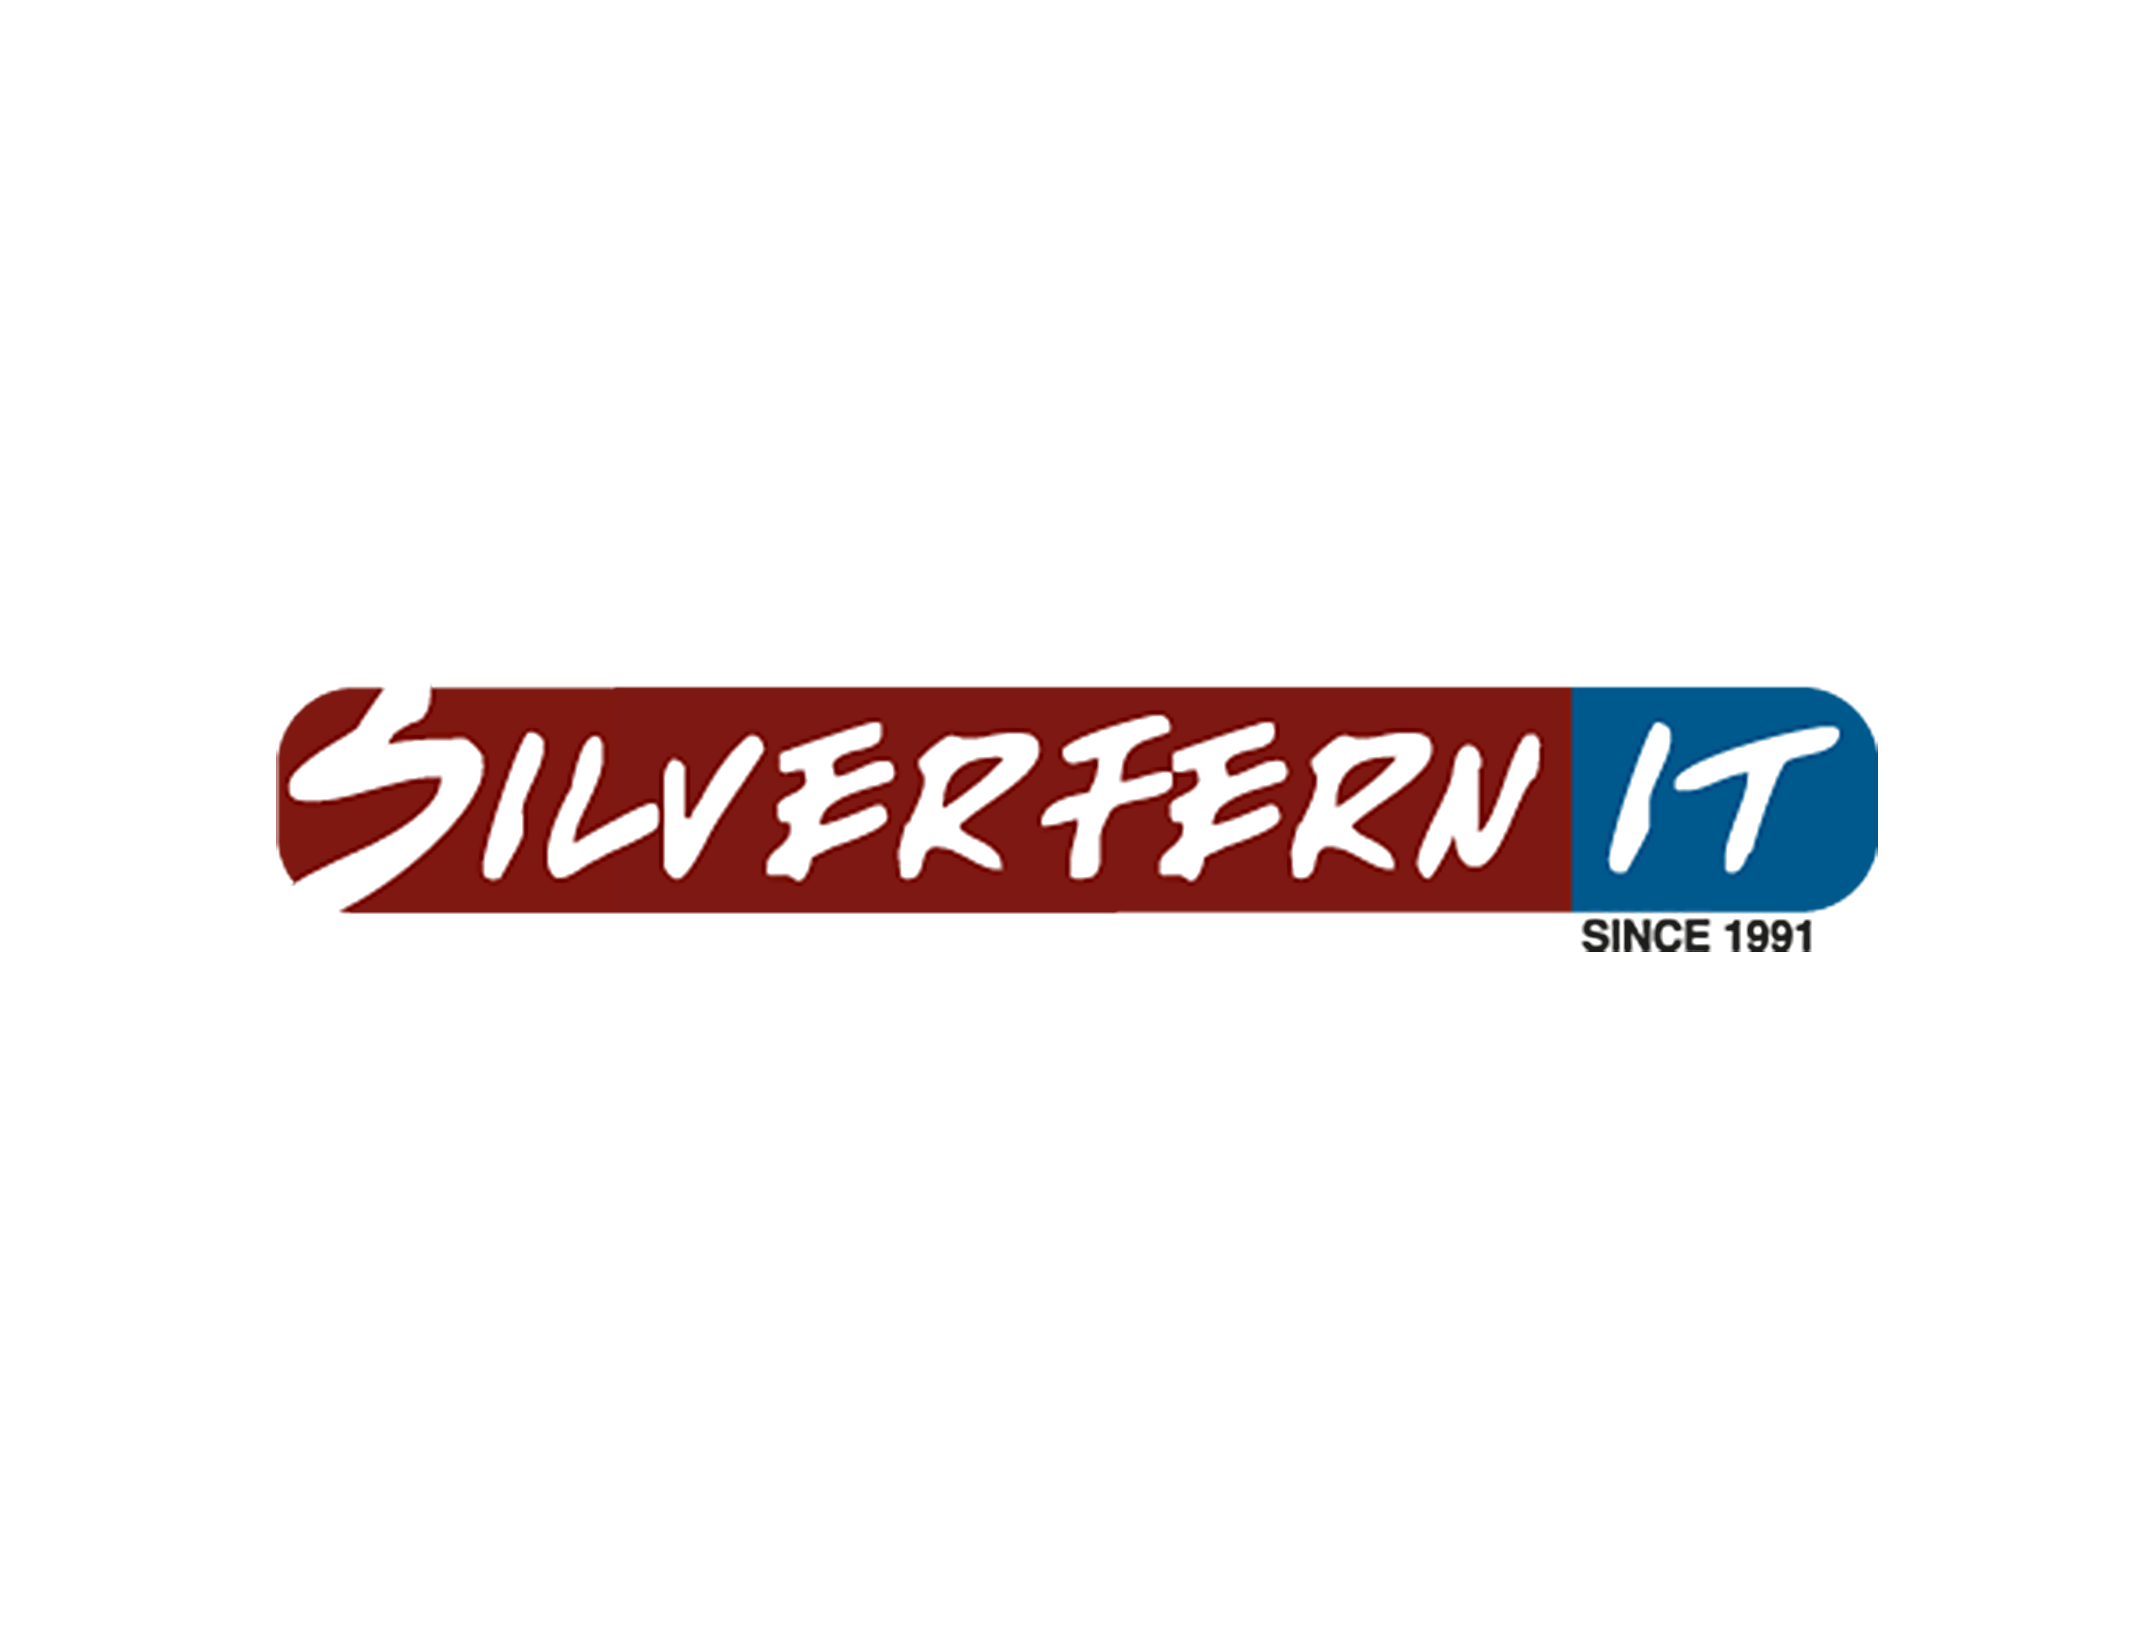 Silverfern IT logo